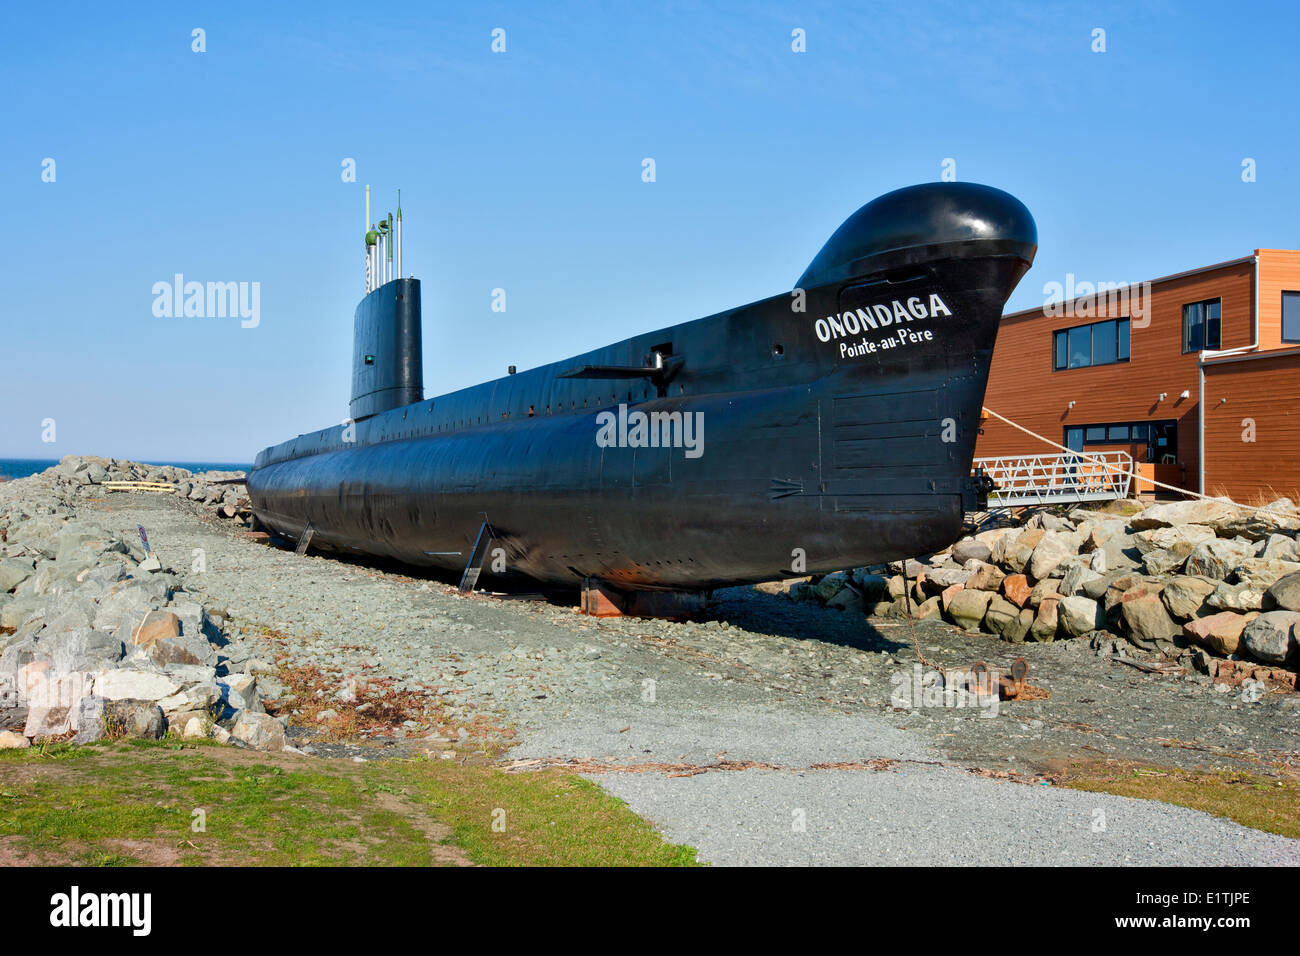 Onondaga submarino, Pointe-au-Père sitio histórico marítimo, Quebec, Canadá Foto de stock